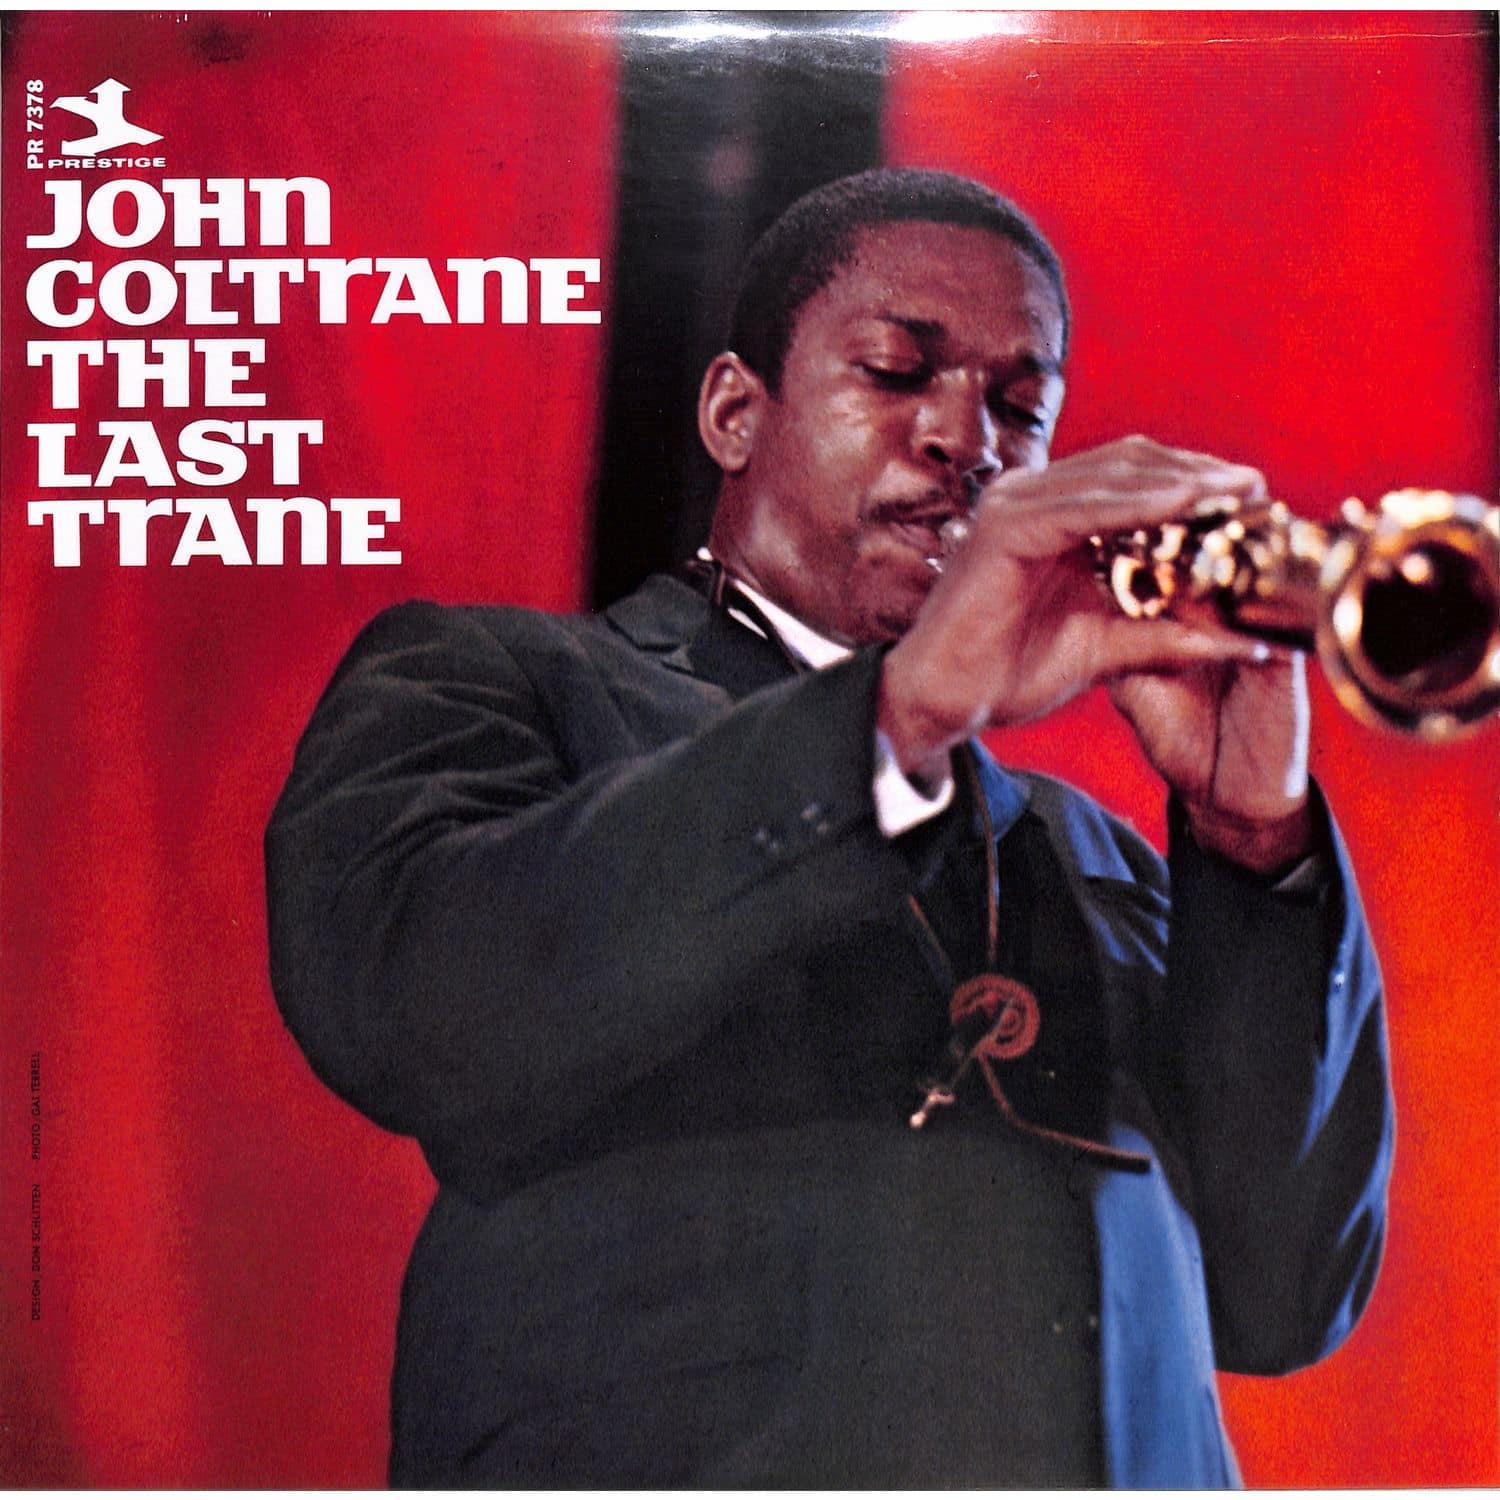 John Coltrane - THE LAST TRANE 